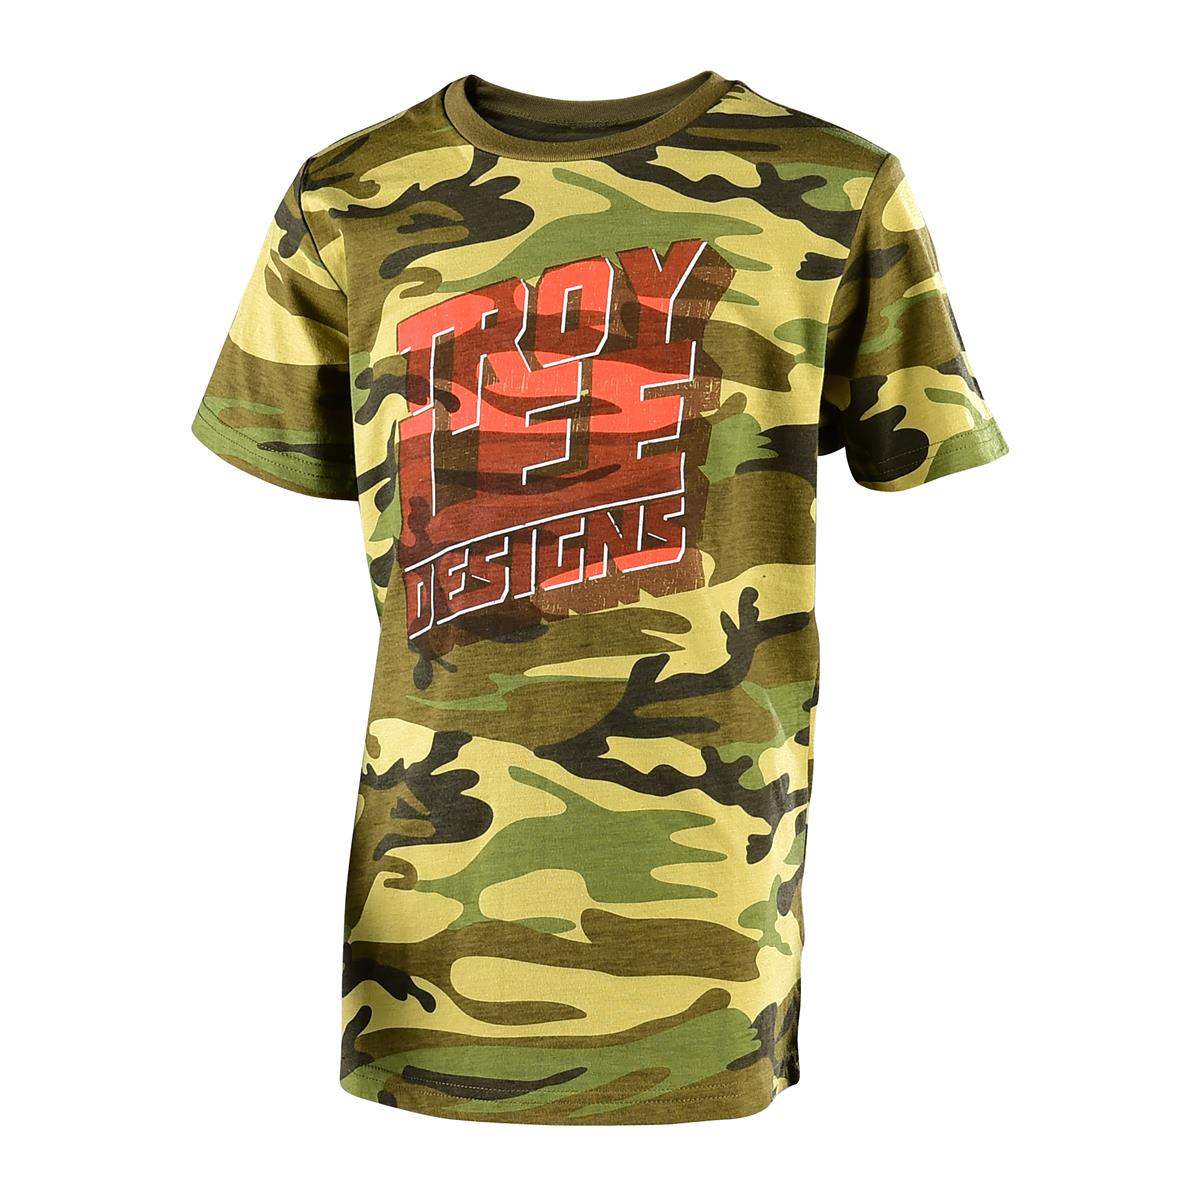 Troy Lee Designs Bimbo T-Shirt Block Party Camo Army Verde